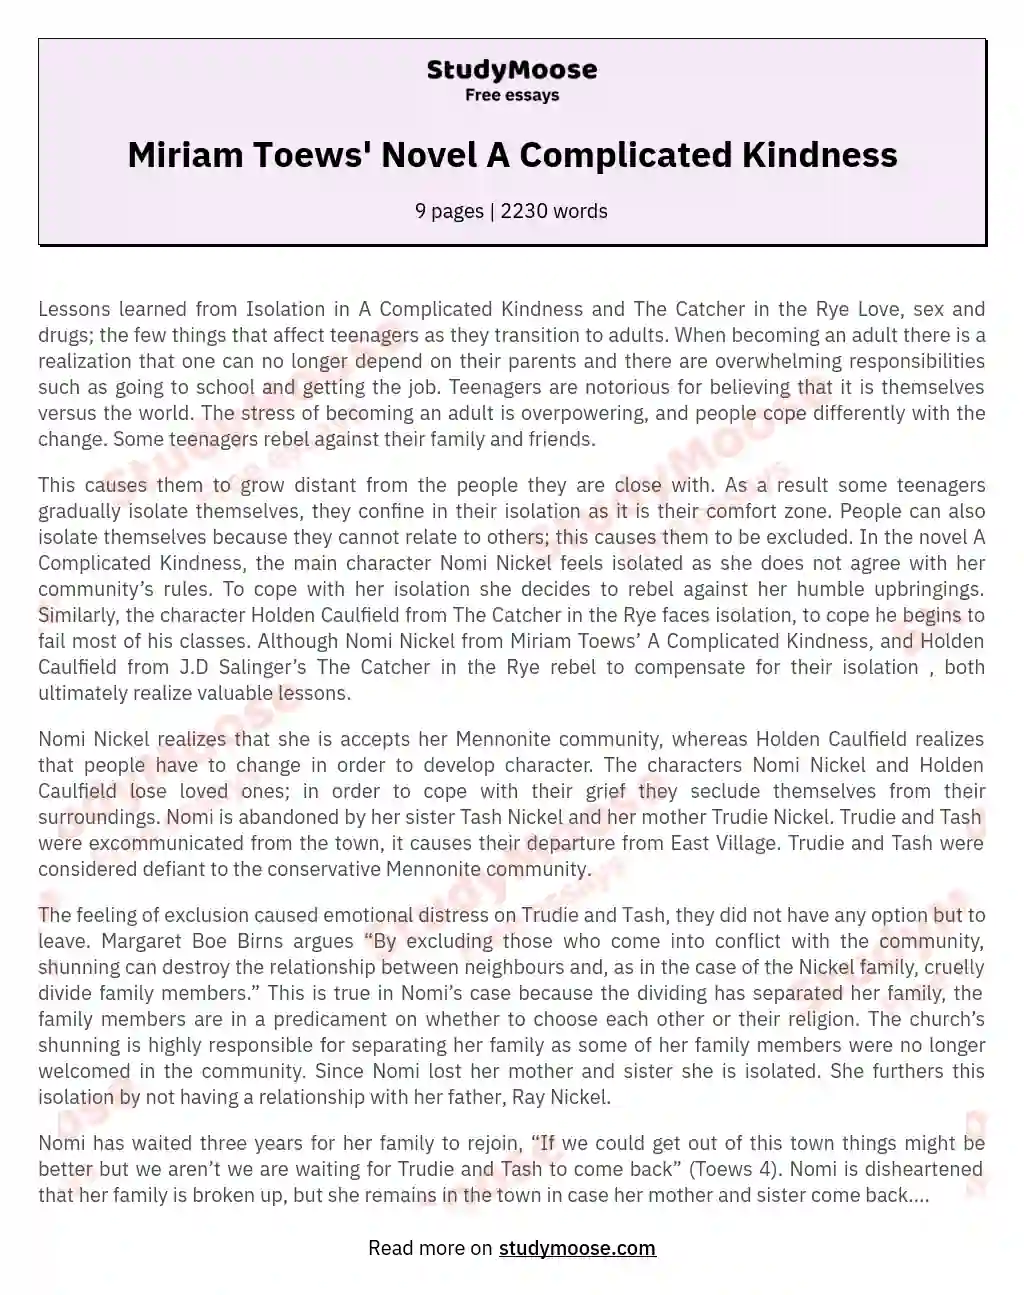 Miriam Toews' Novel A Complicated Kindness